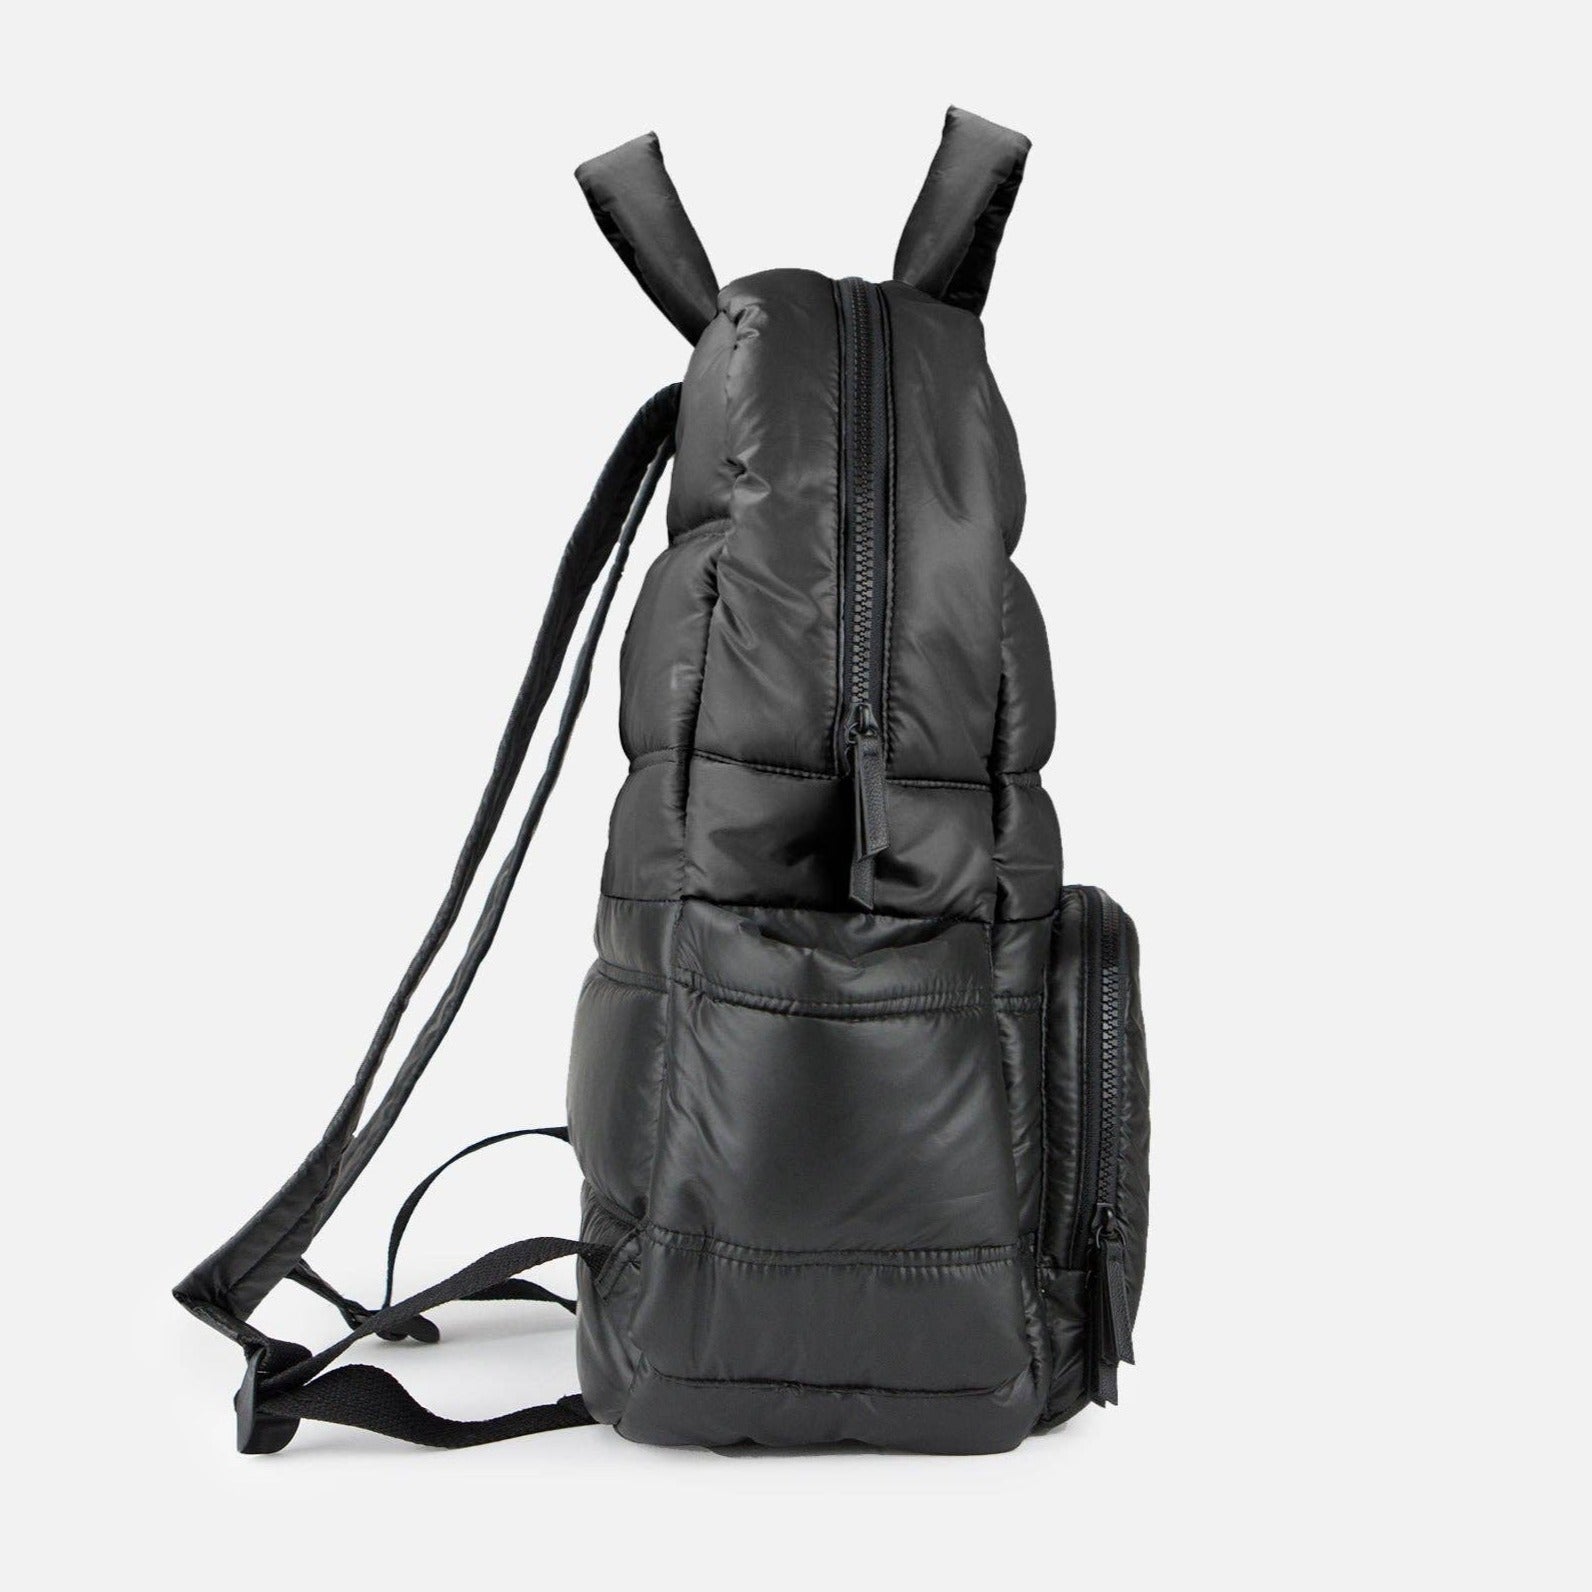 BK718 Backpack Diaper Bag - Black